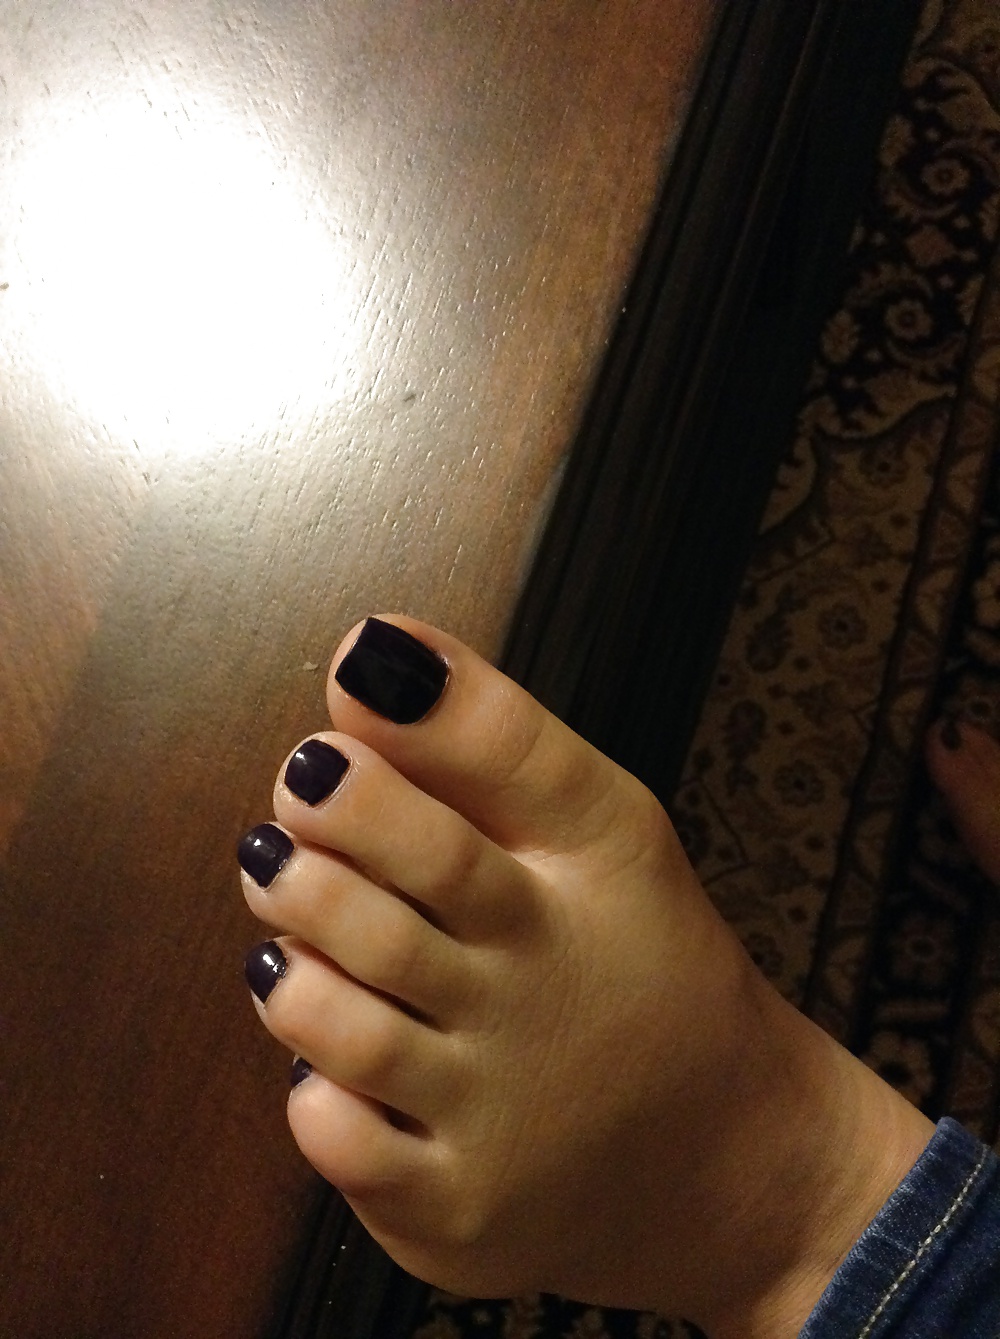 My latina girlfriend's feet. #40688266